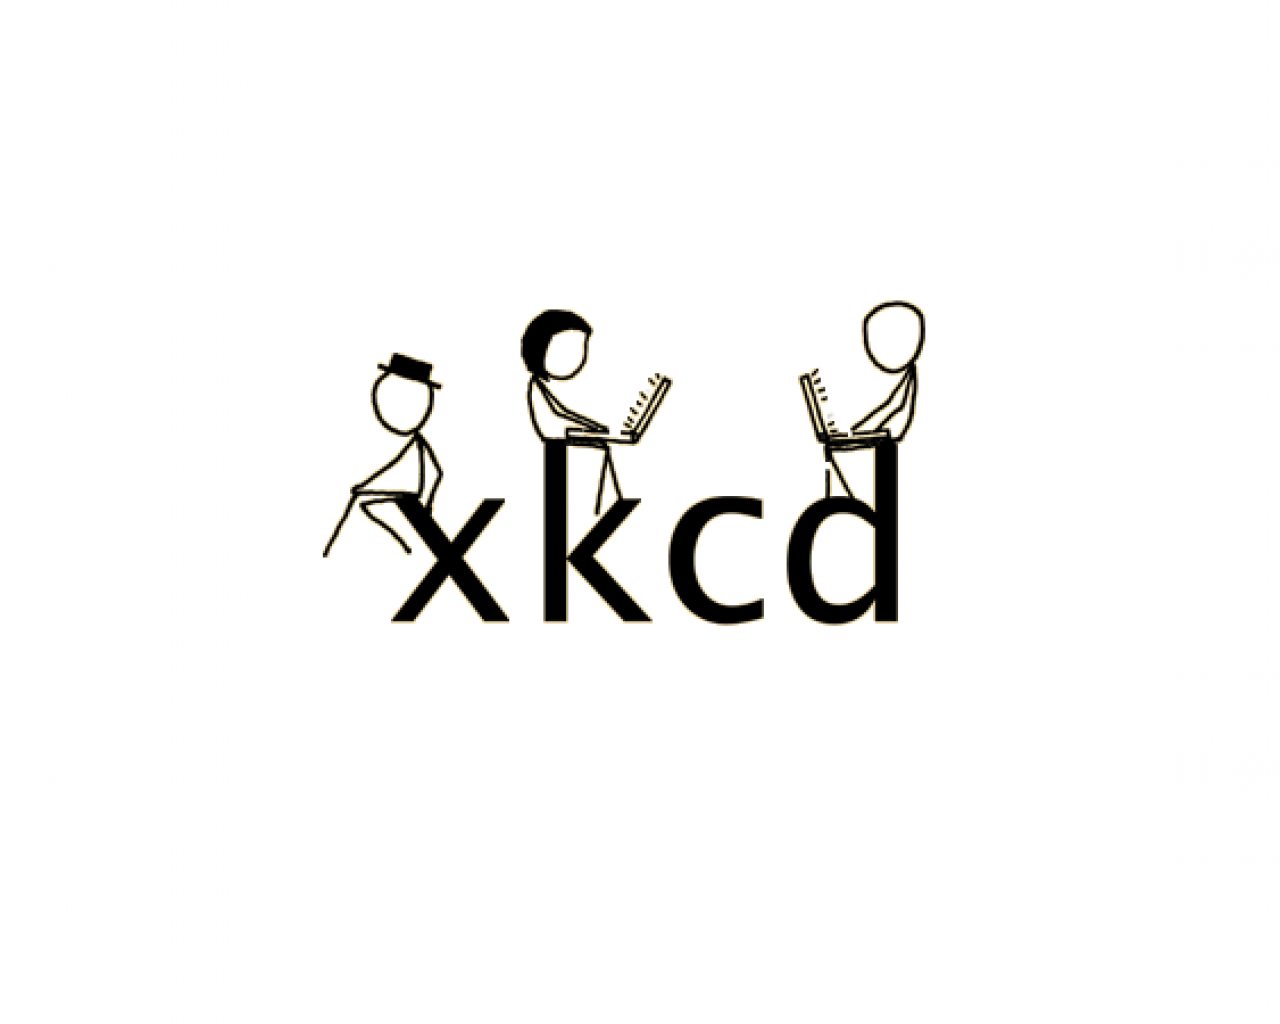 Proxy cho xkcd.com